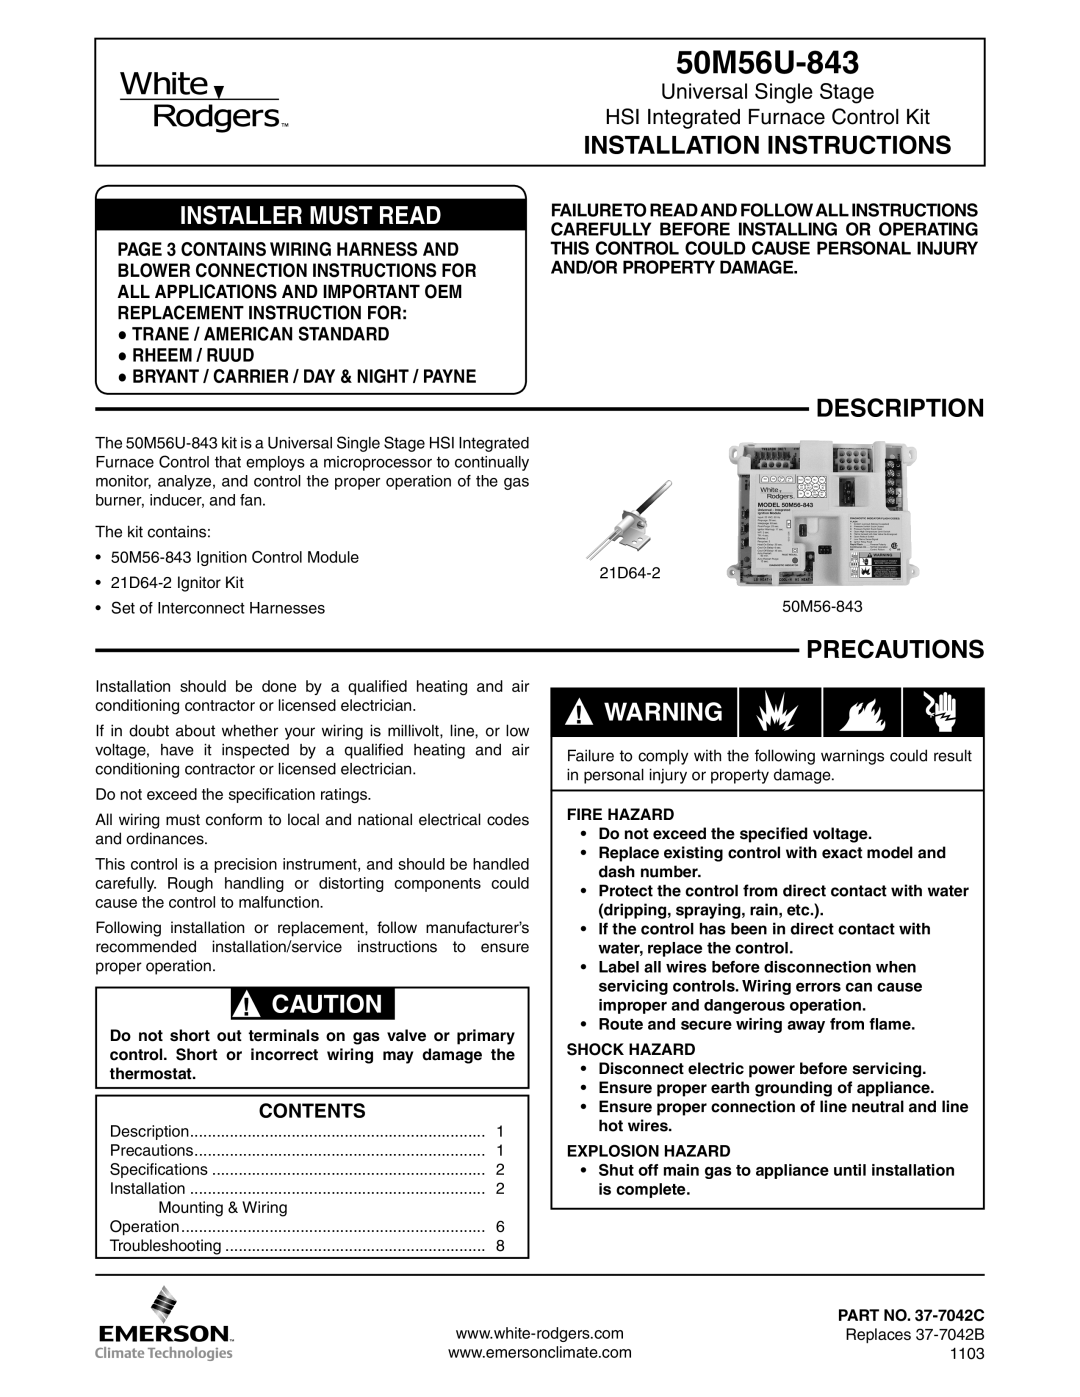 White Rodgers 50M56U-843 installation instructions Installation Instructions, Description, Precautions, Contents 